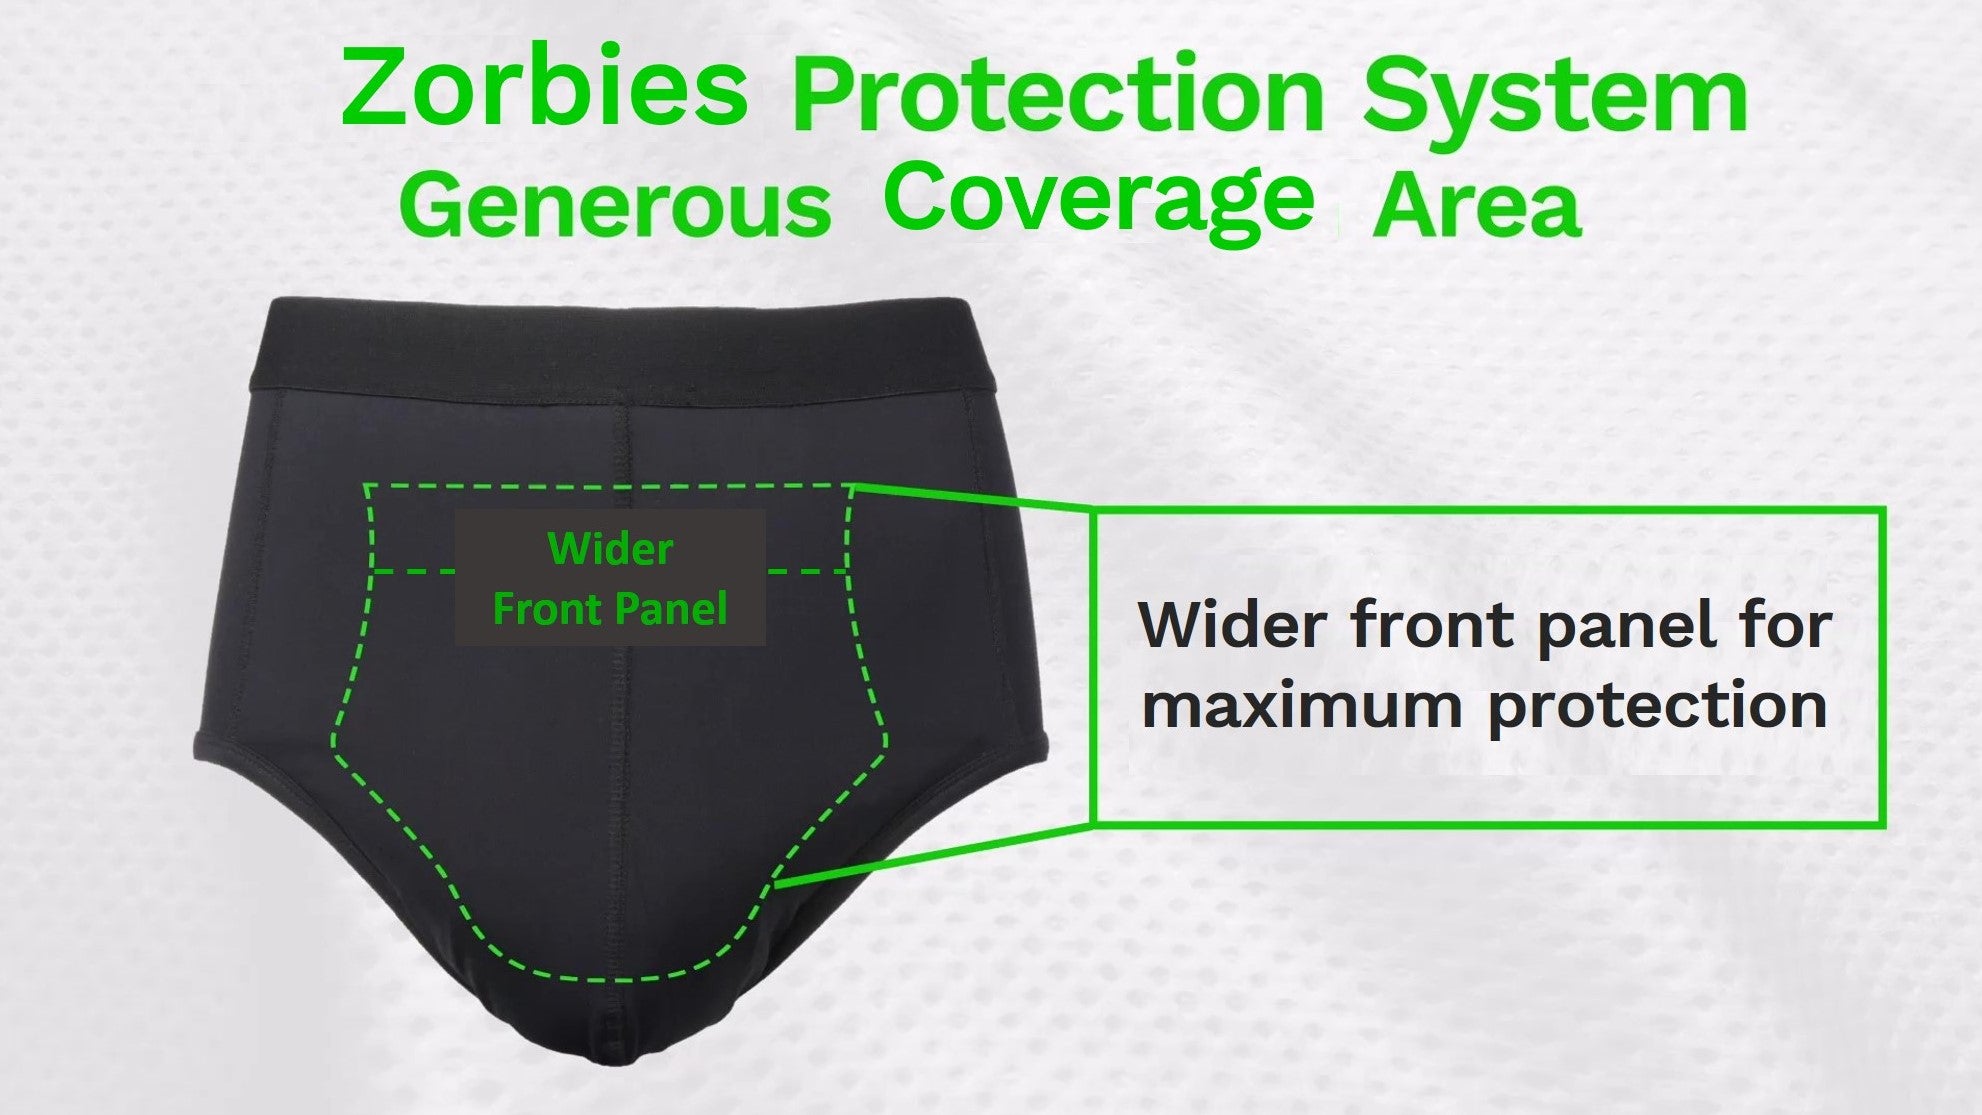 Waterproof Incontinence Underpants, 3 Pair